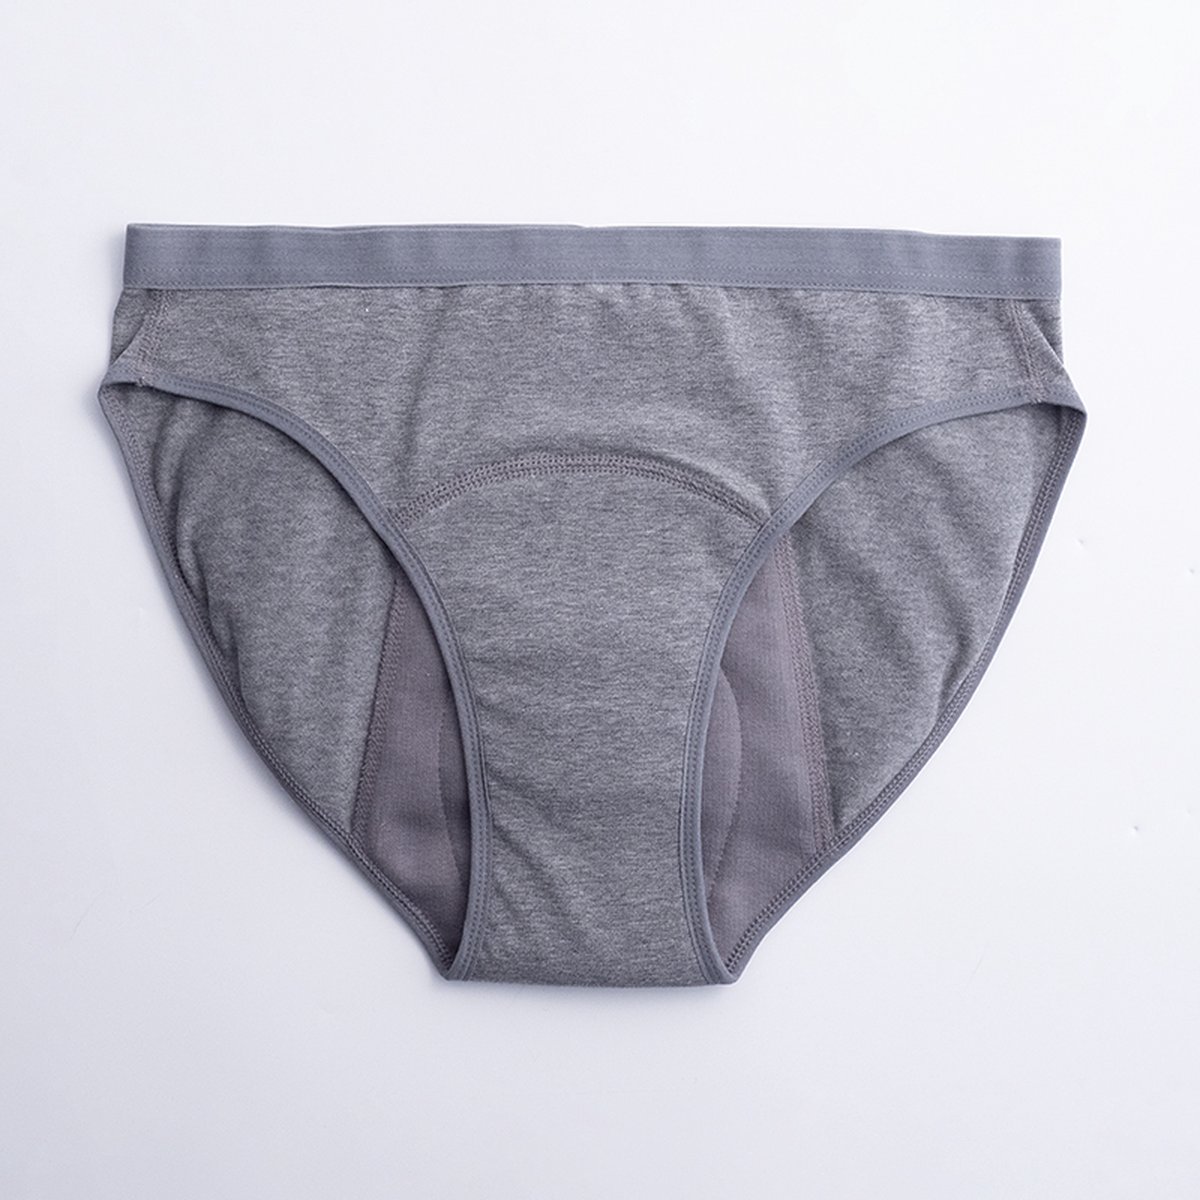 ImseVimse - Imse - menstruatieondergoed - Bikini model period underwear - hevige menstruatie - S - eur 36/38 - grijs